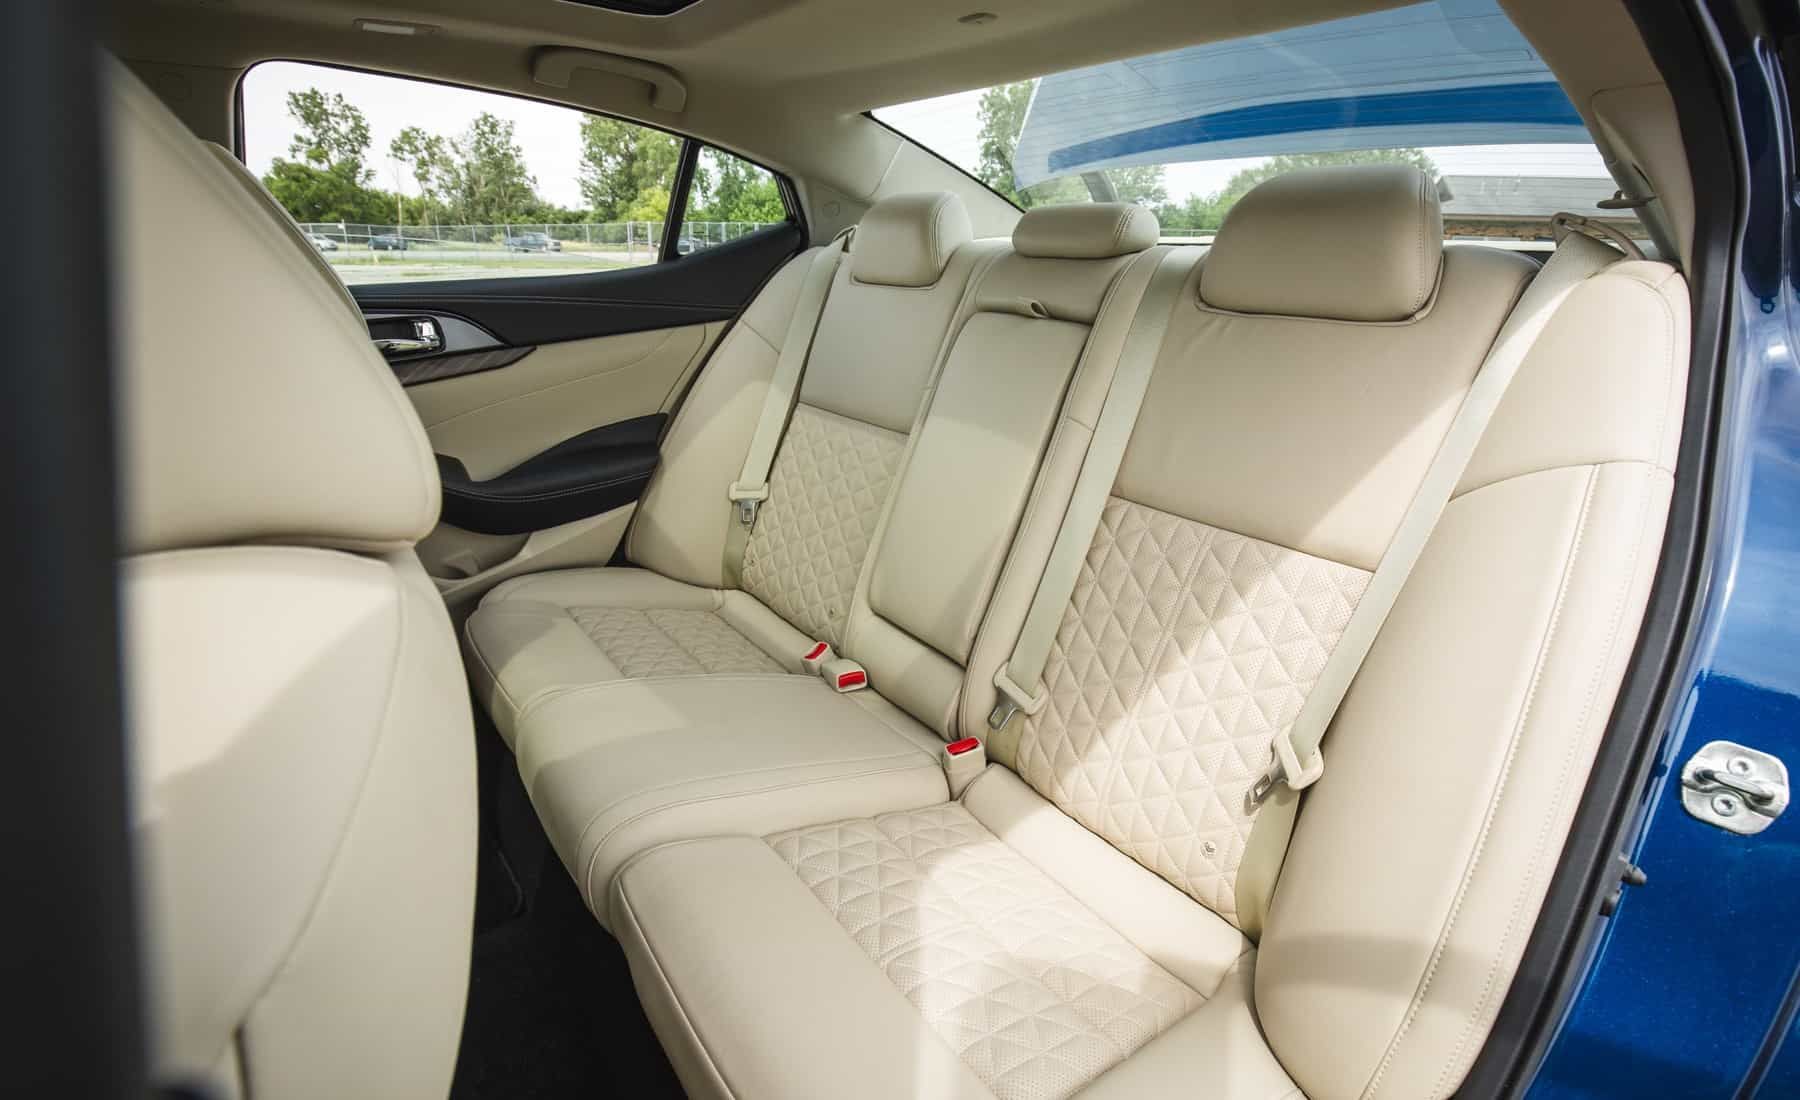 2017 Nissan Maxima Interior Seats Rear Passengers (View 3 of 40)